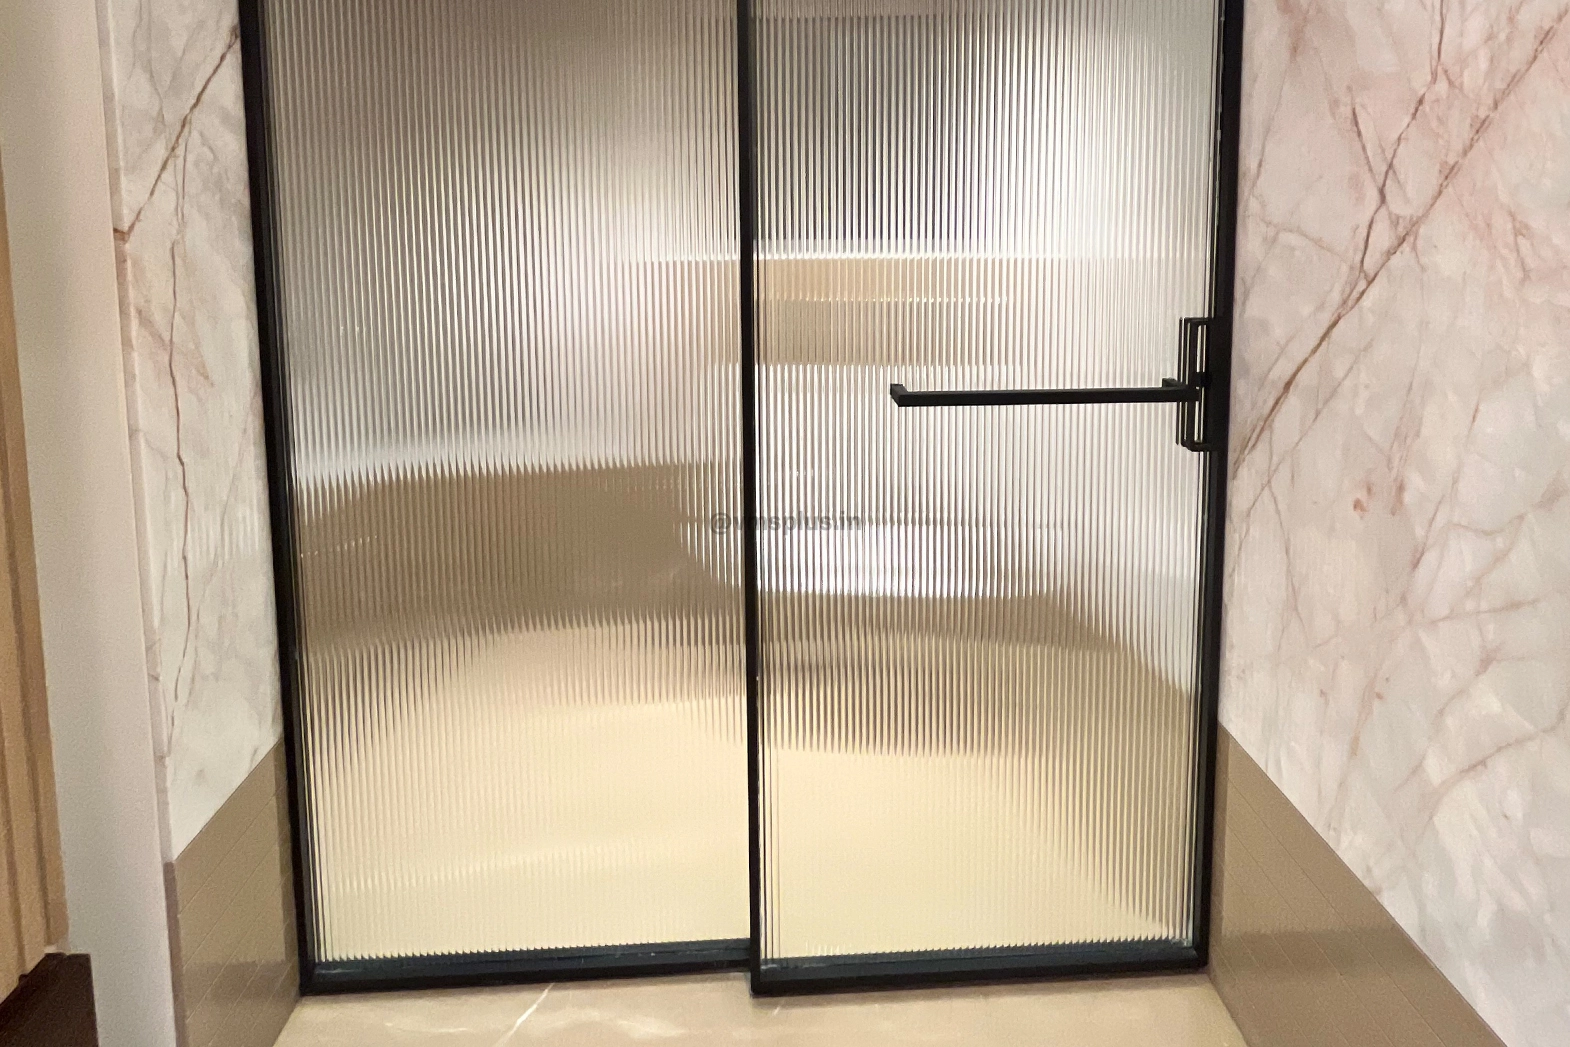 Glass Shower Doors: How to Prevent Spots